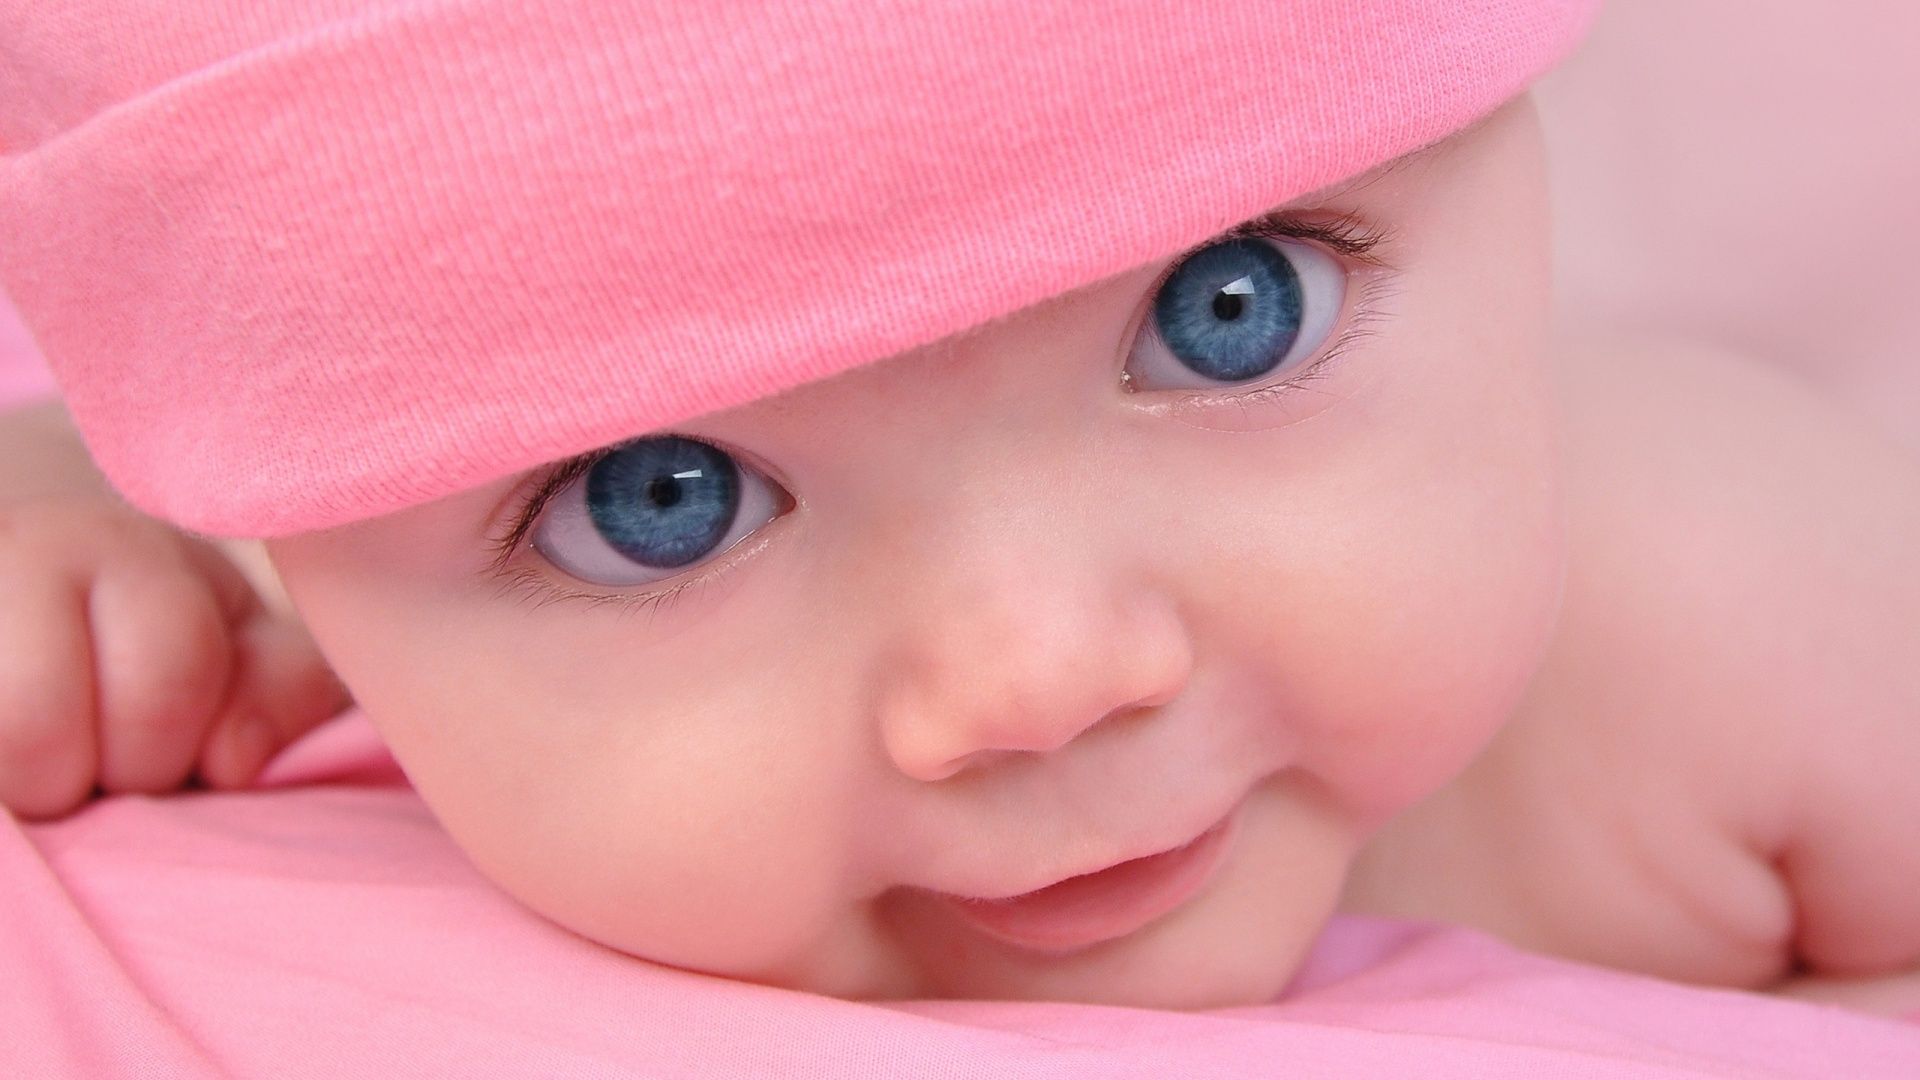 Cute Baby Wallpaper Download HD 6800 - HD Wallpapers Site